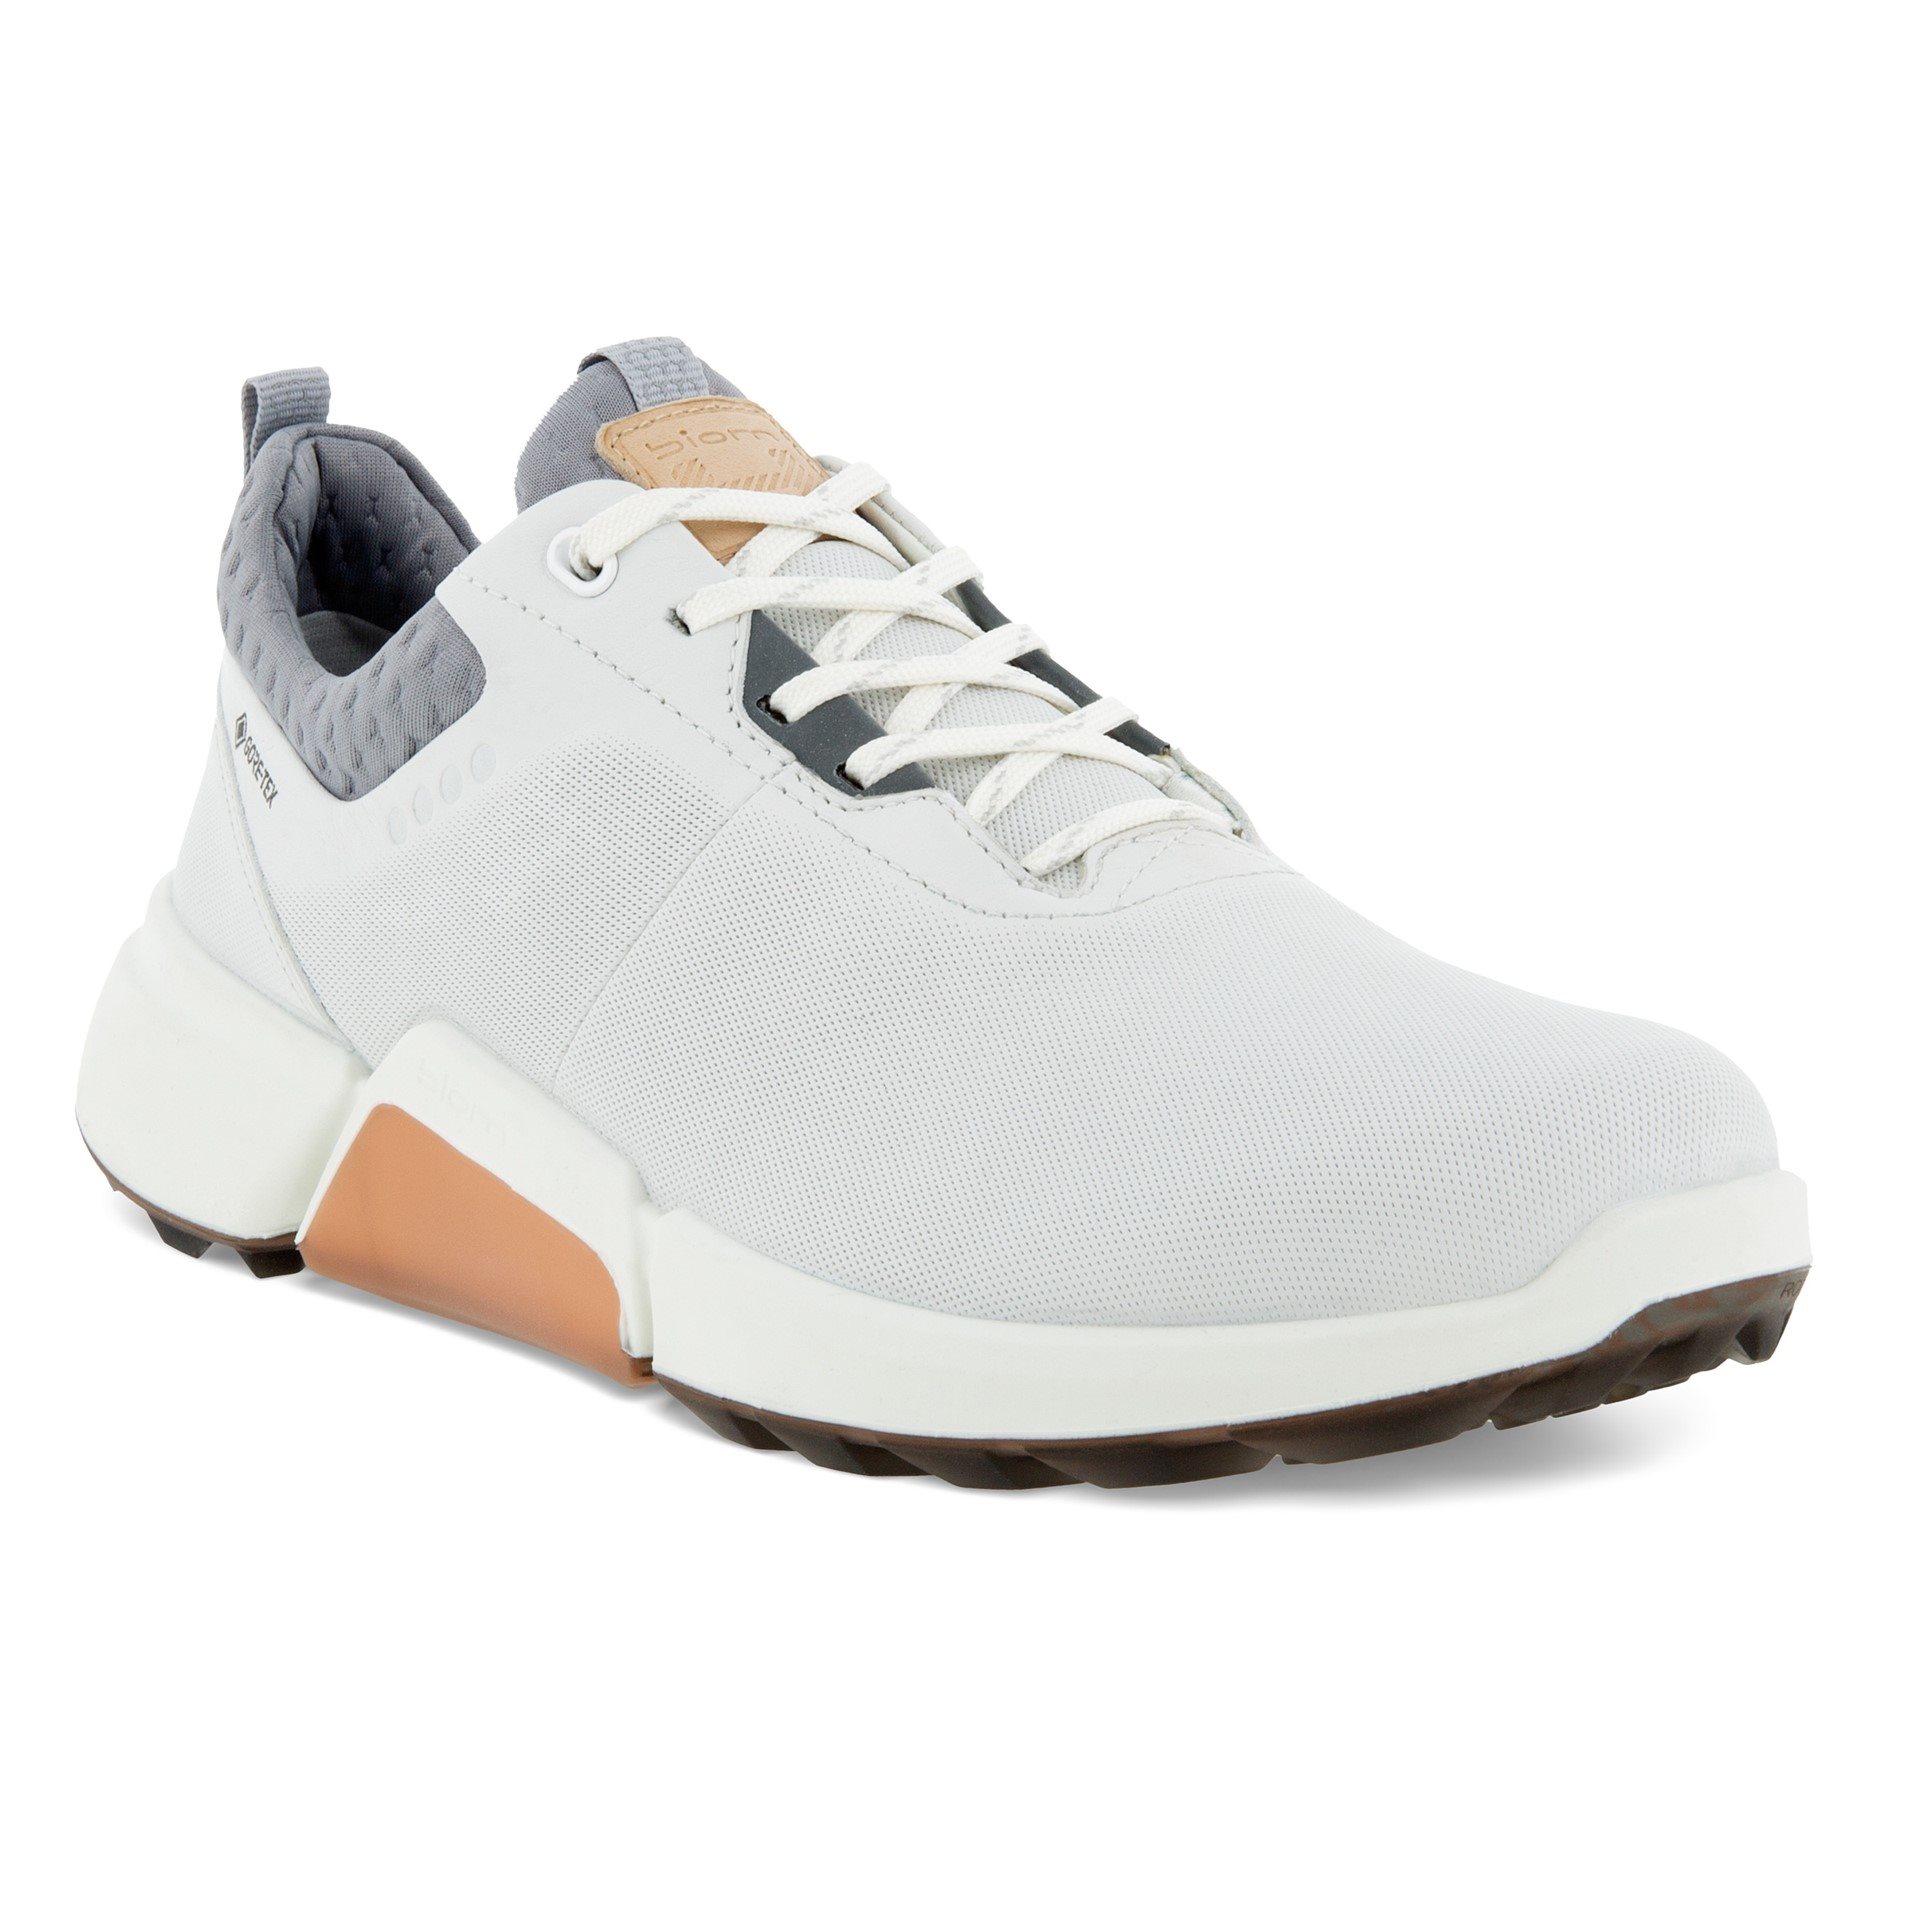 Ecco dames golfschoenen Biom H4 wit zilver grijs - Golftassen, Golfclubs, Golfschoenen | Ook online kopen bij Golfers Point | Golfers Point